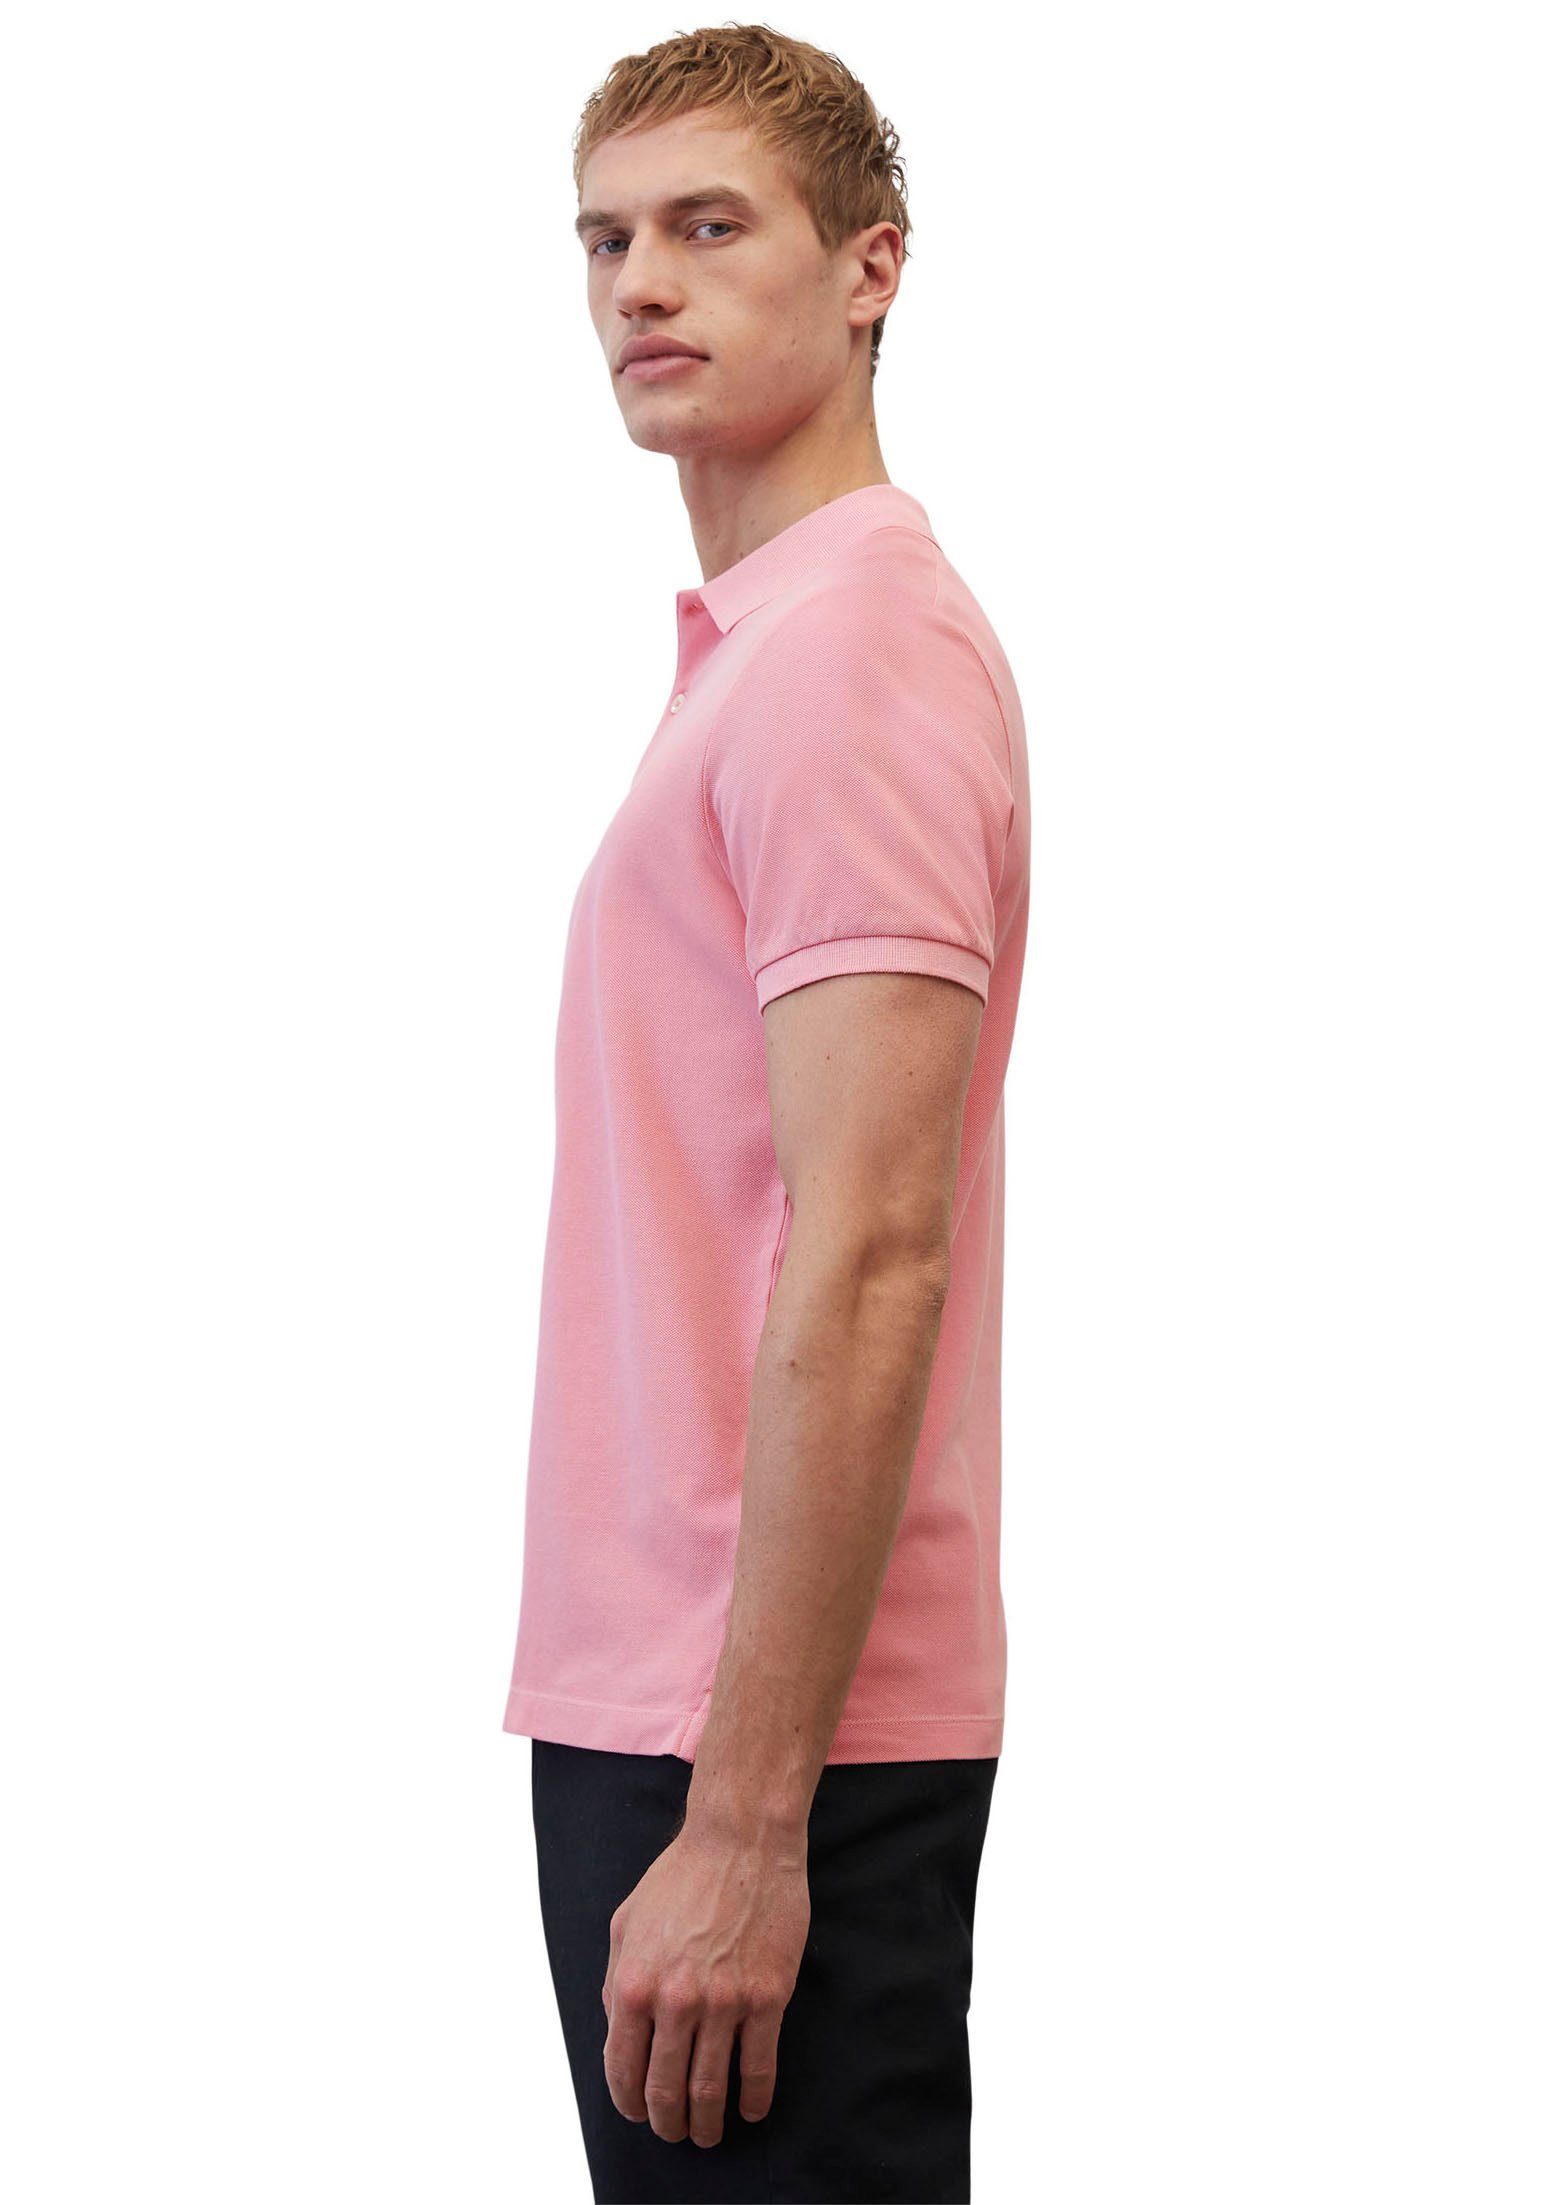 Marc O'Polo Poloshirt im klassischen Look pink